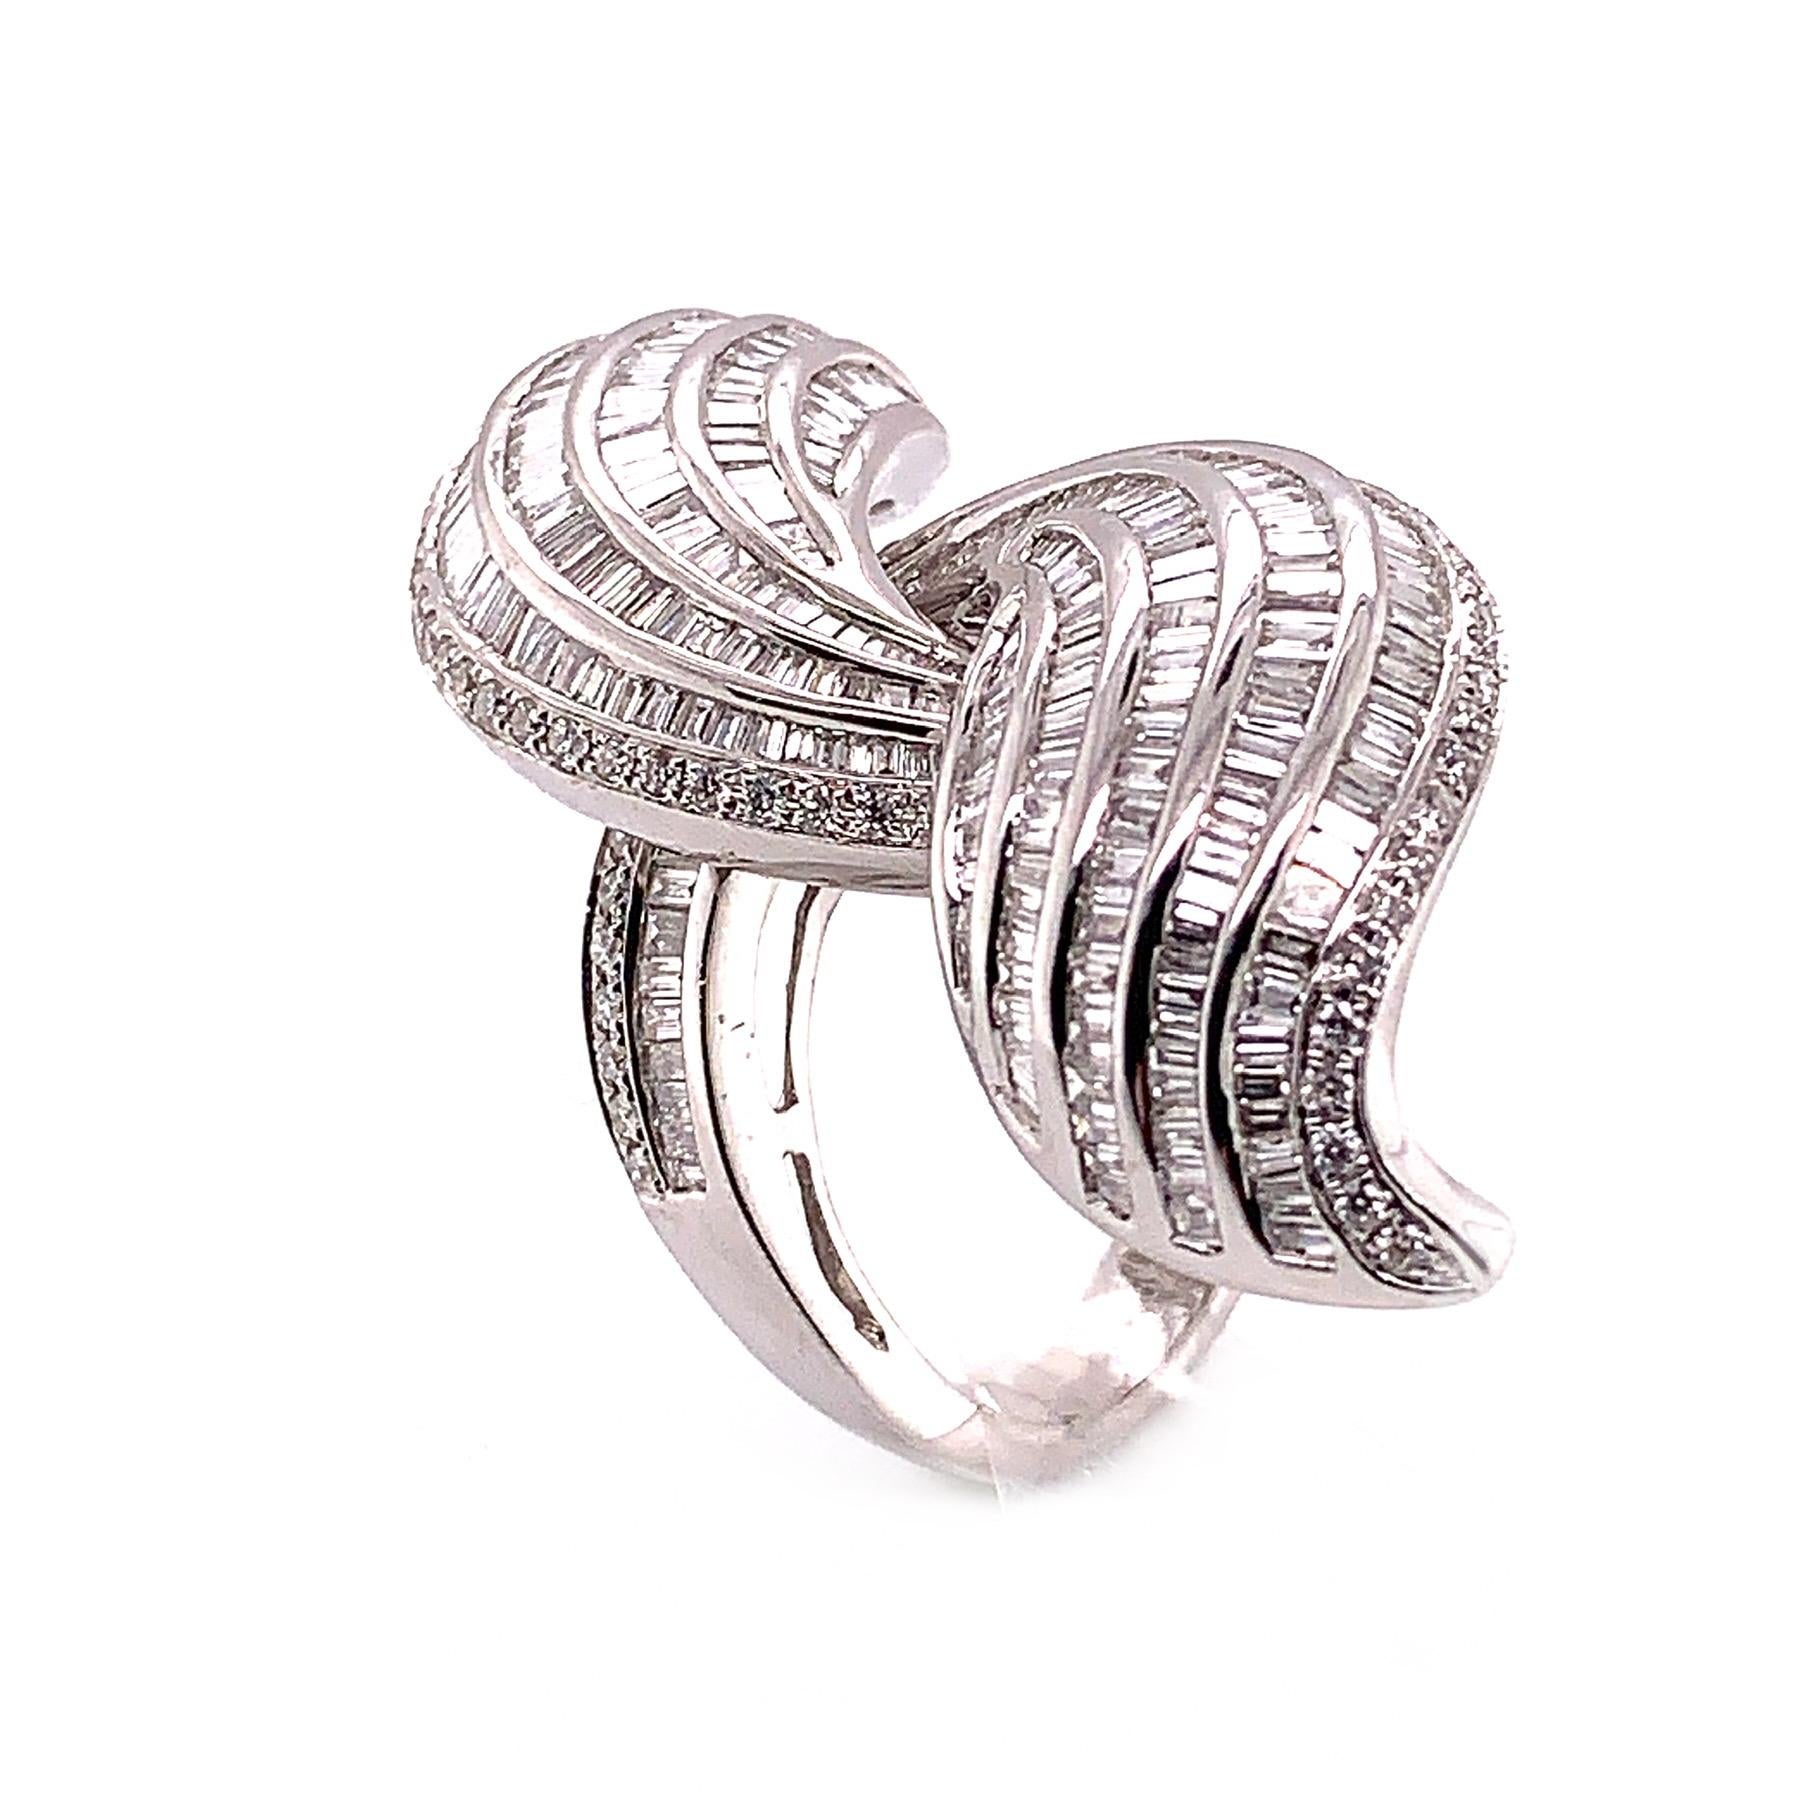 3.6 Carat Twirling Baguette Diamond Ring Crafted in 18 Karat White Gold 2